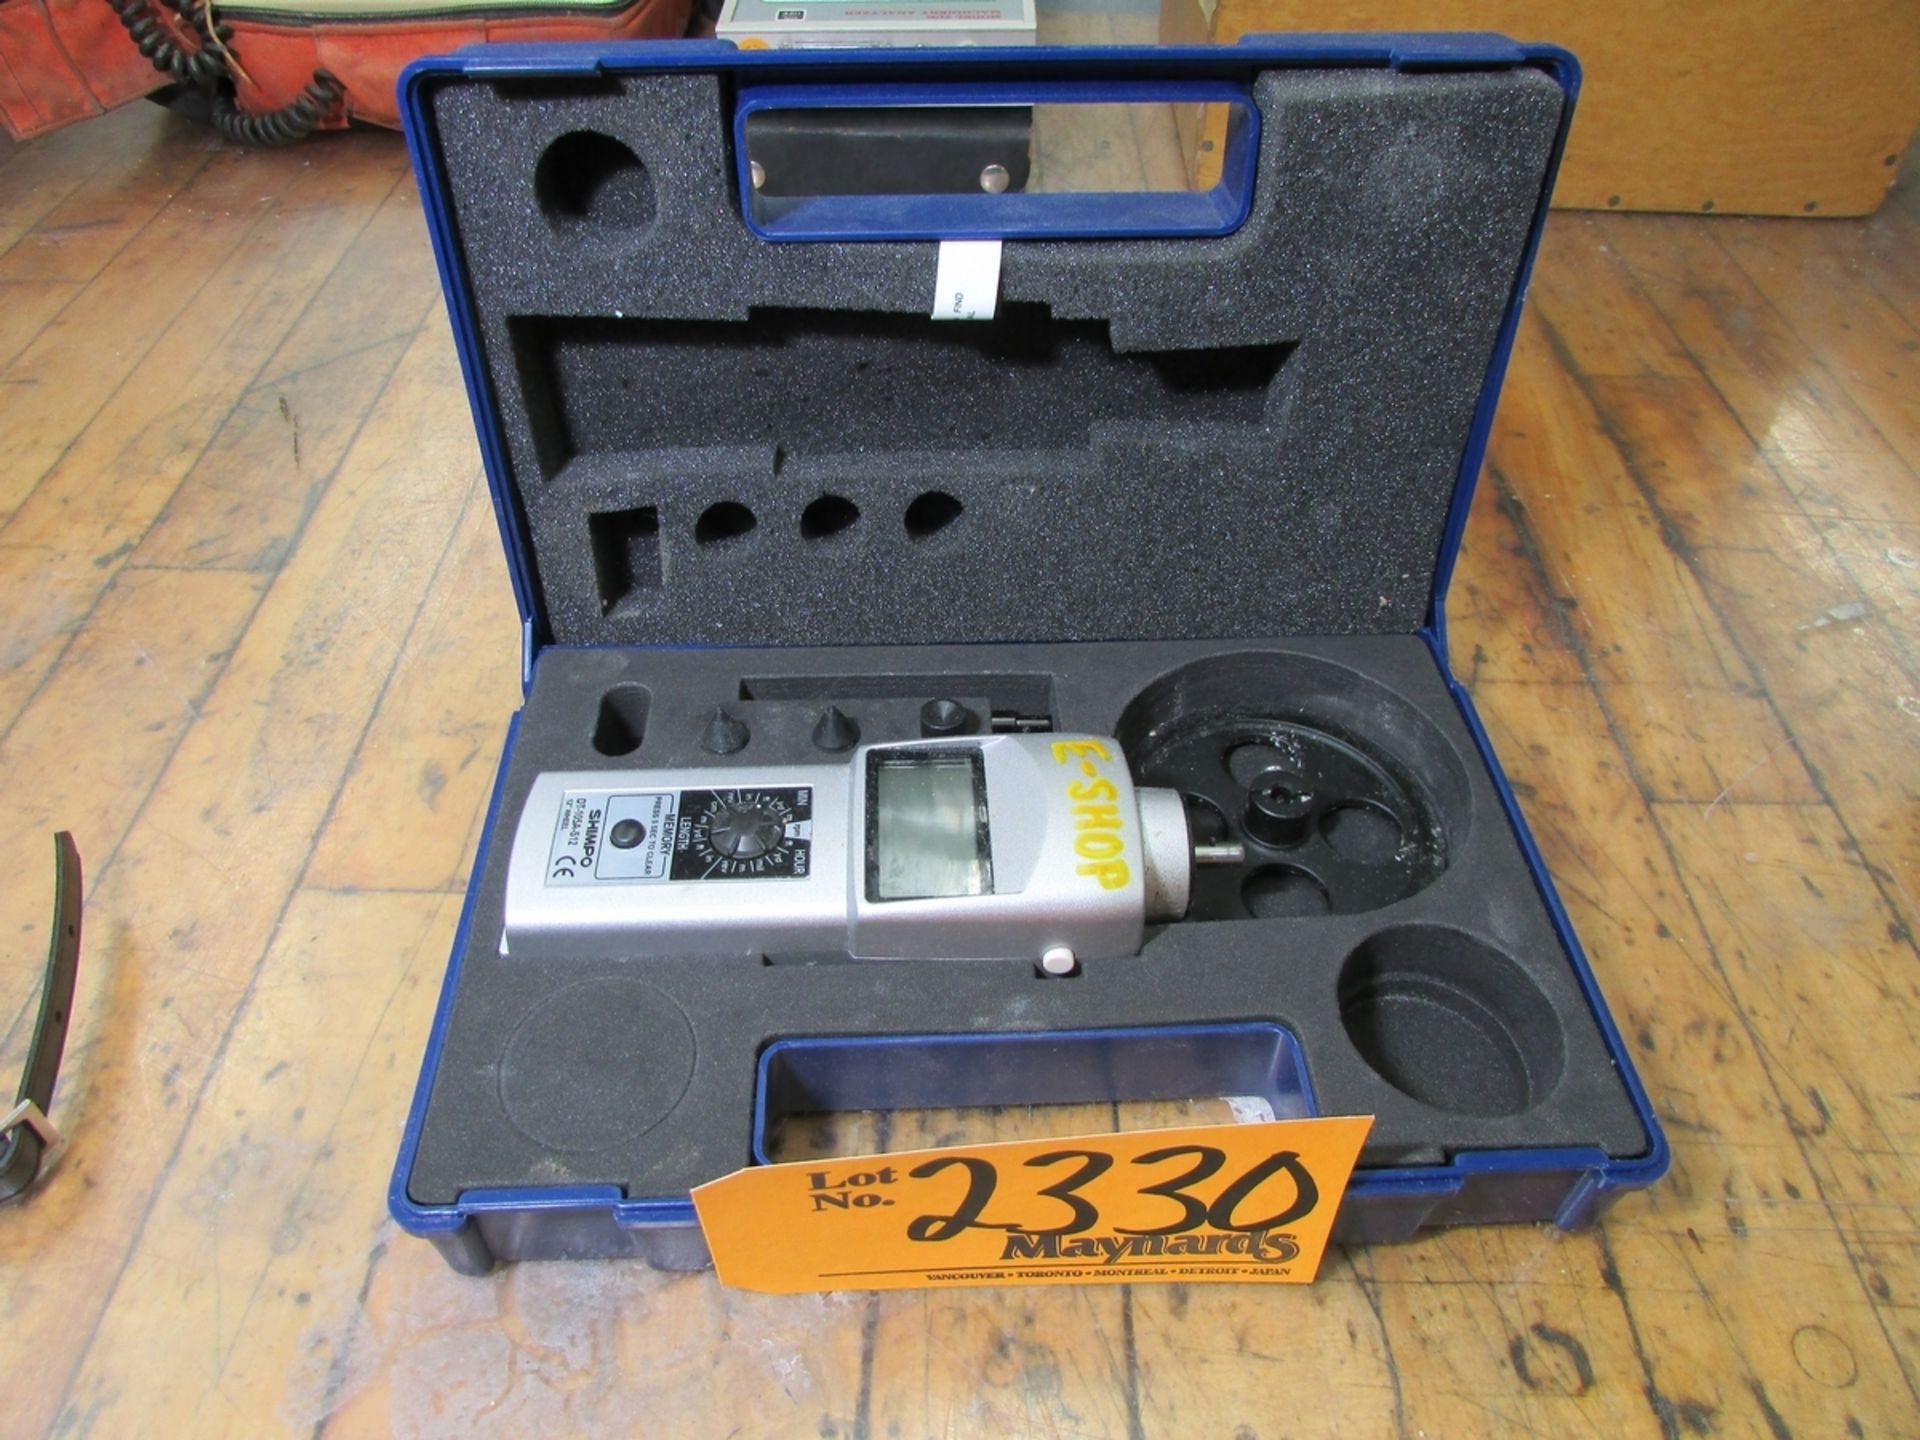 Shimpo DT-105A-S12 Portable Digital Tachometer